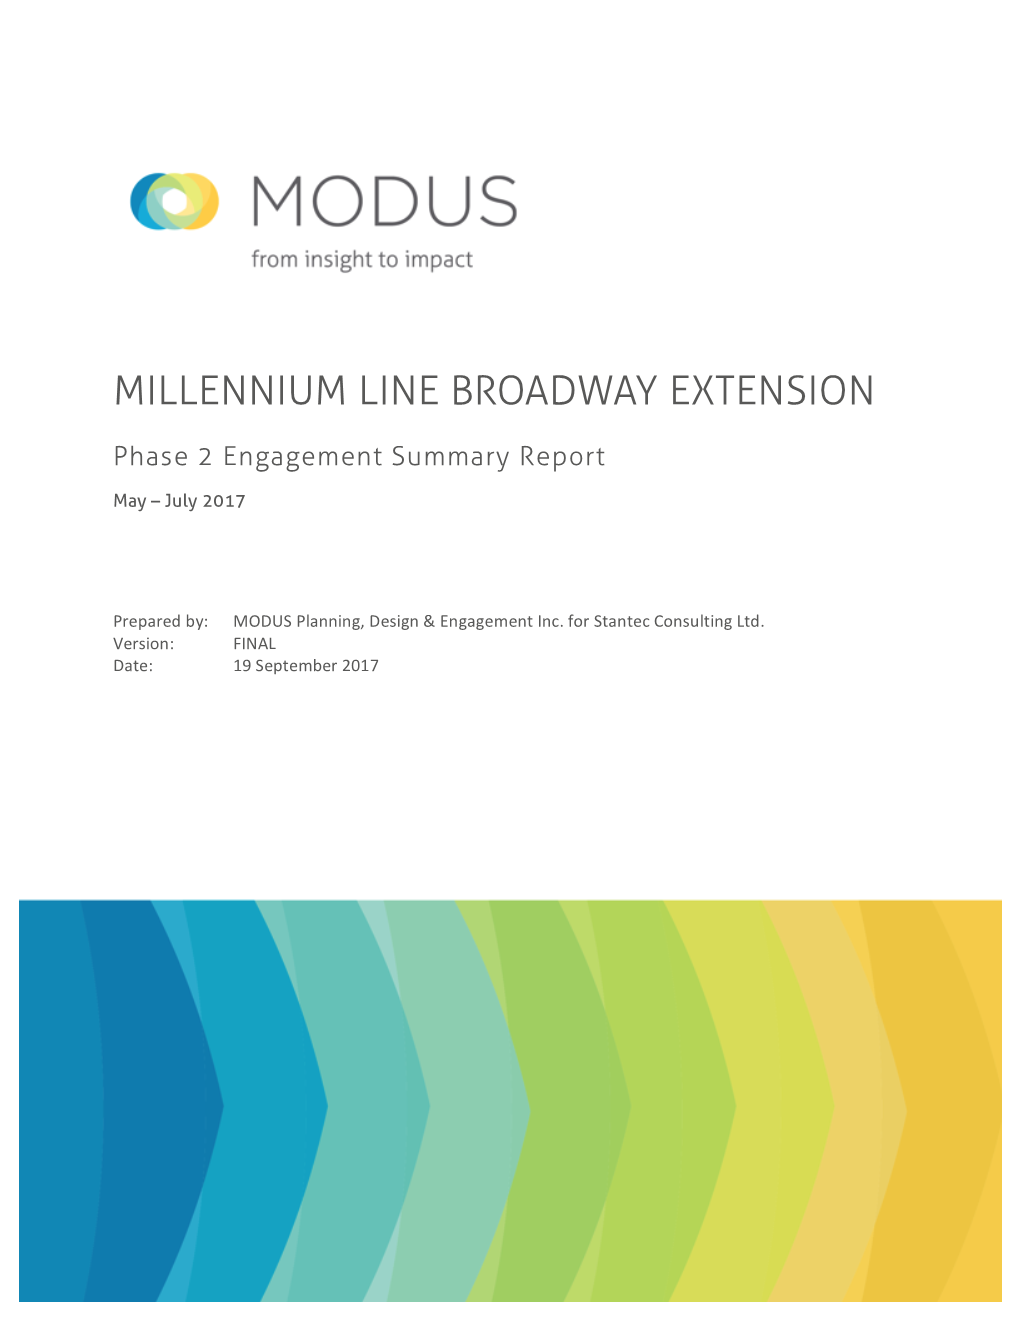 Millennium Line Broadway Extension